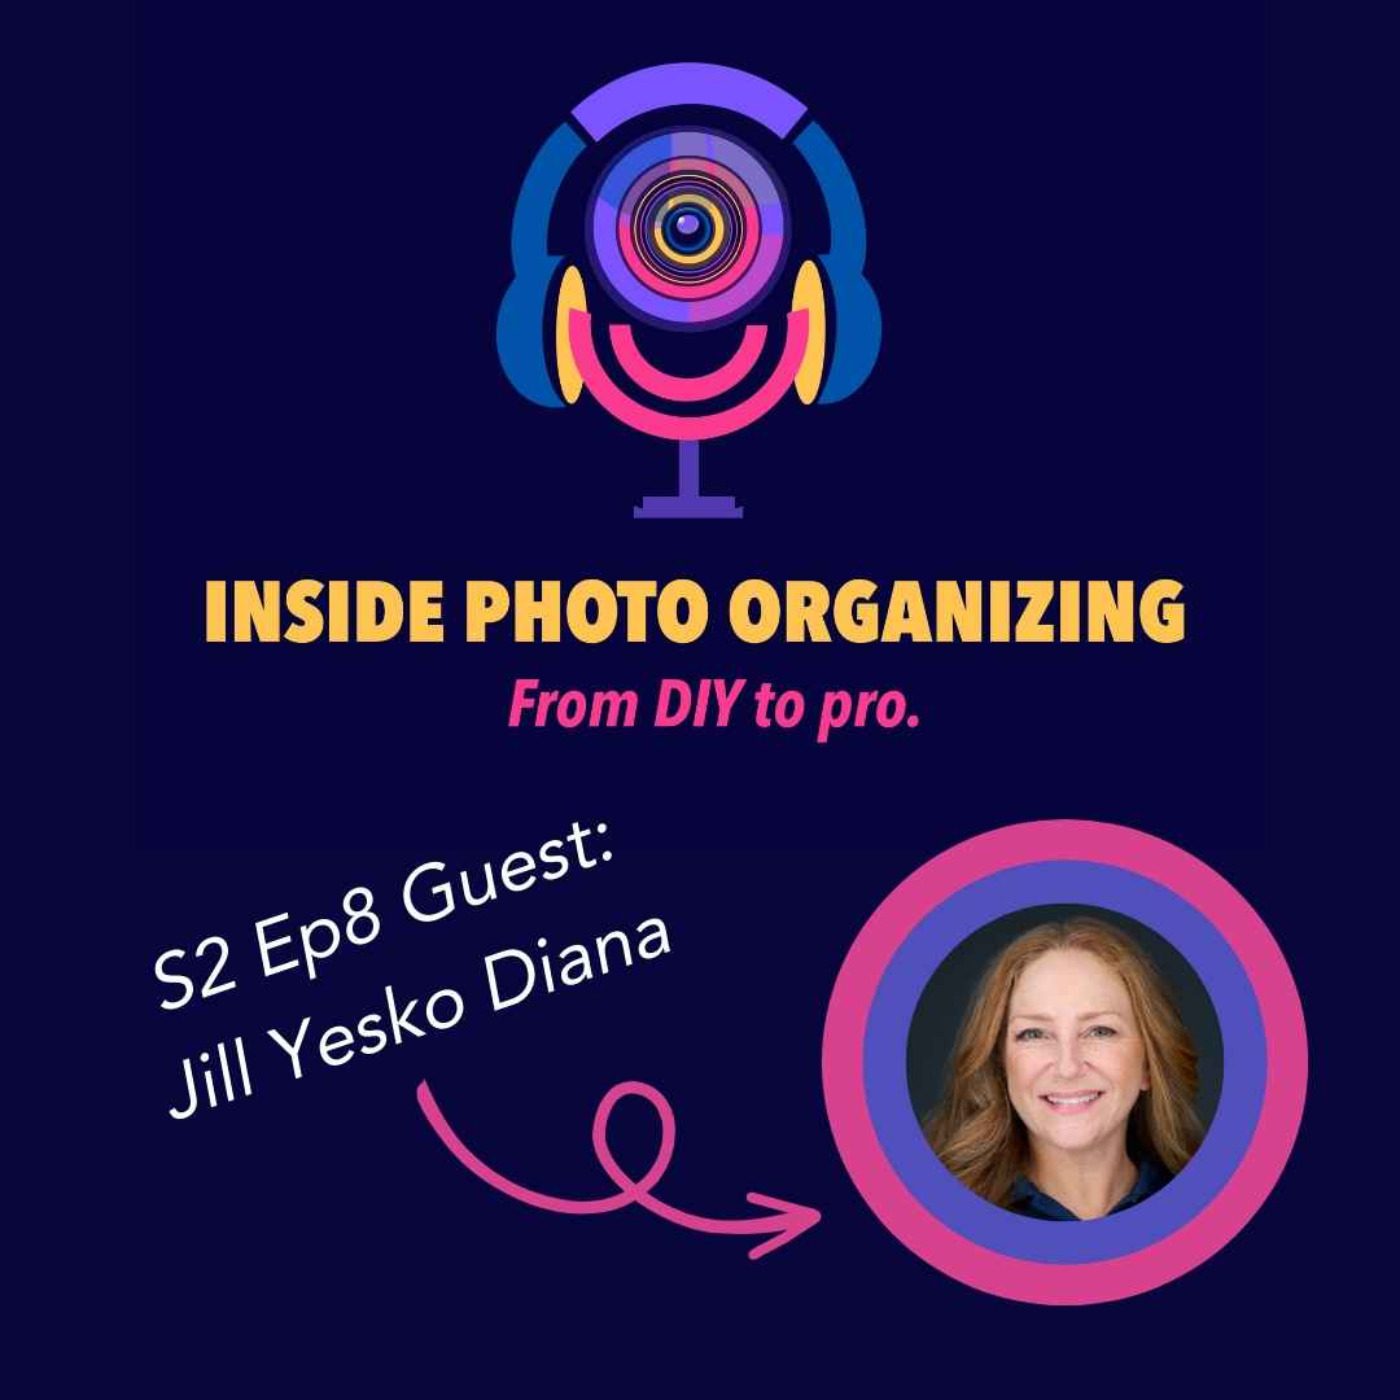 Episode 8: Jill Yesko Diana